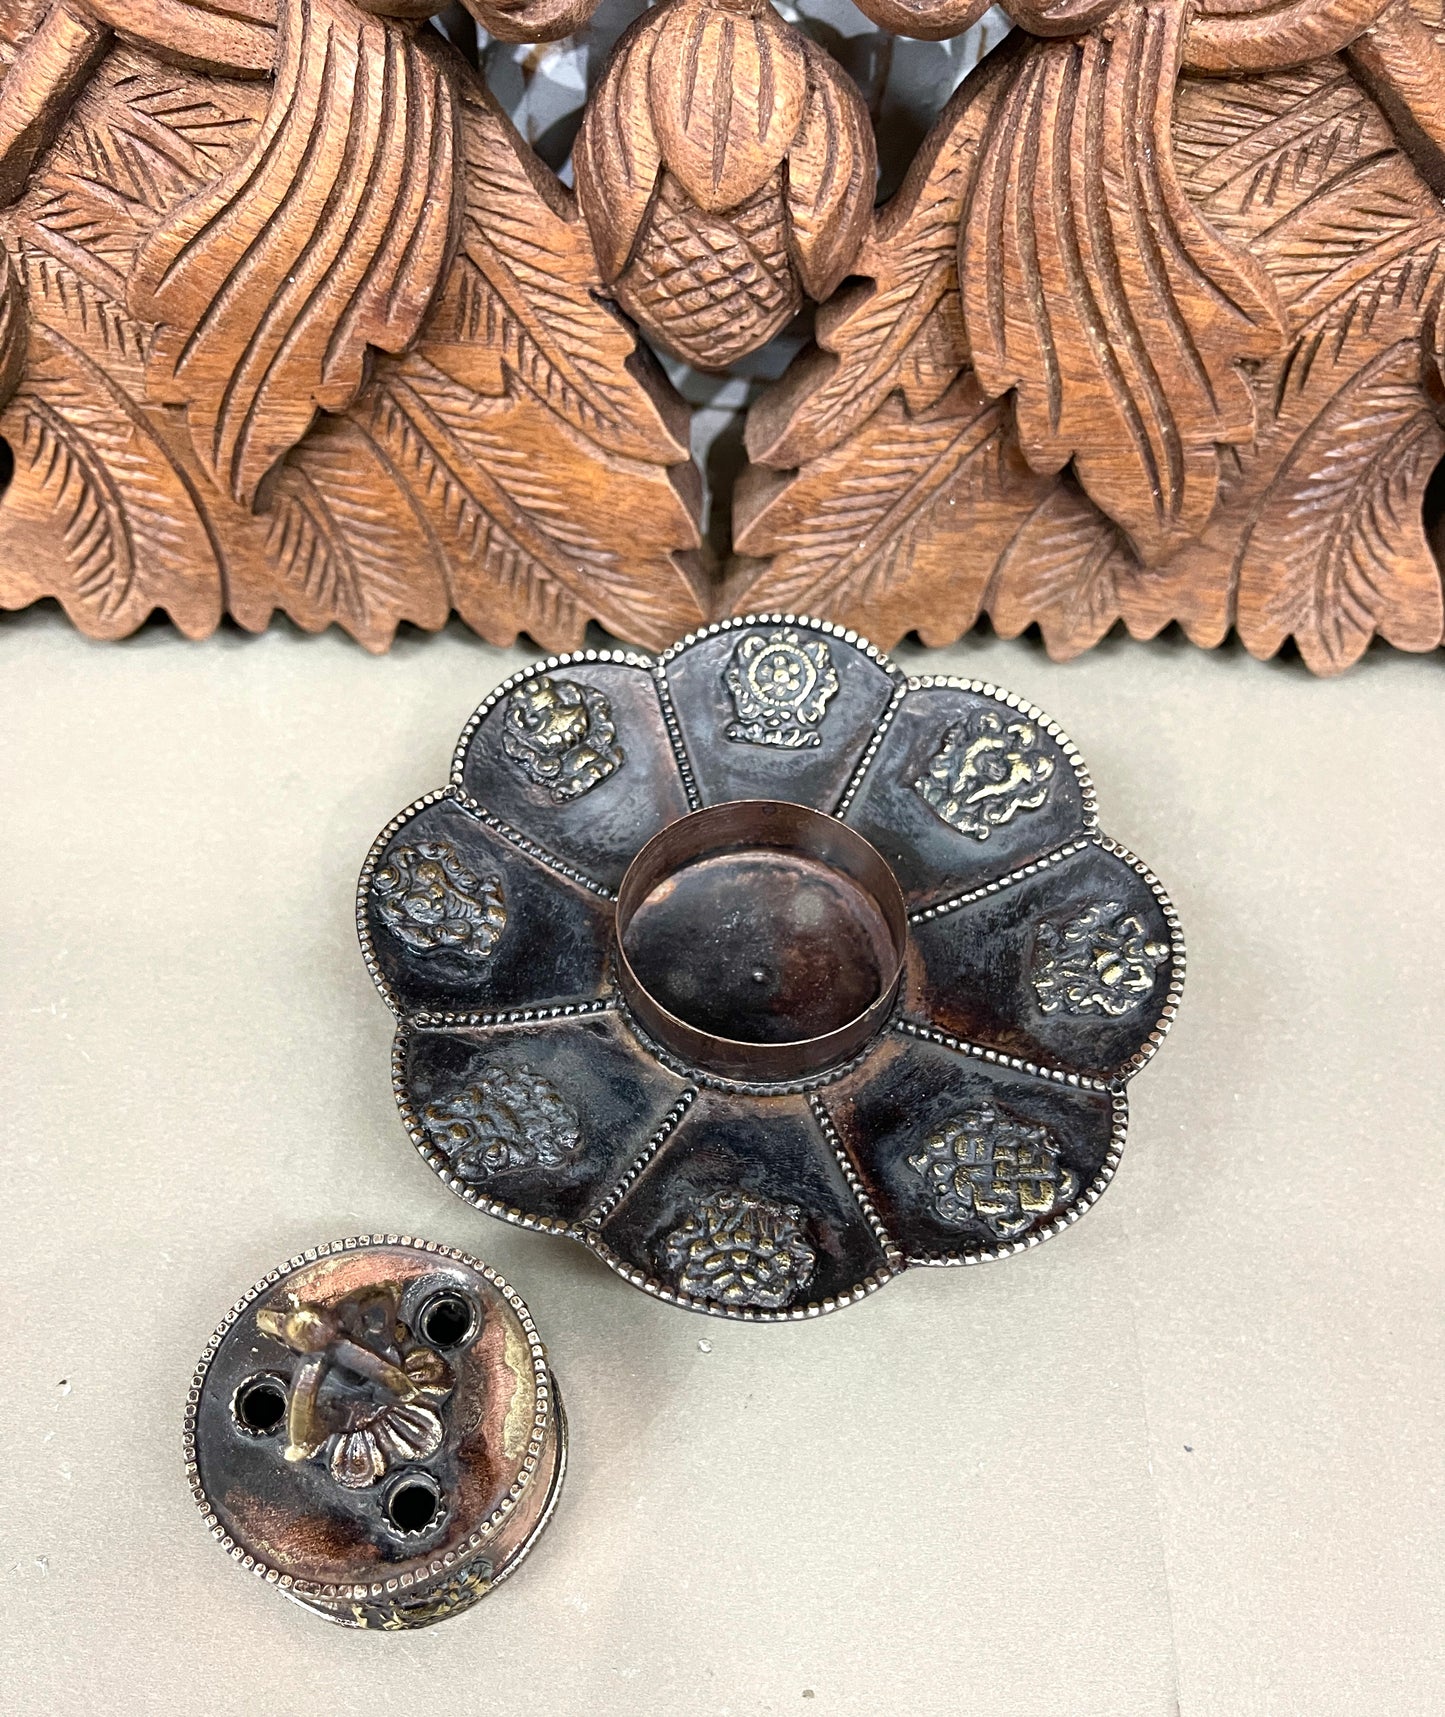 Nepali Incense burners or T-Light holders